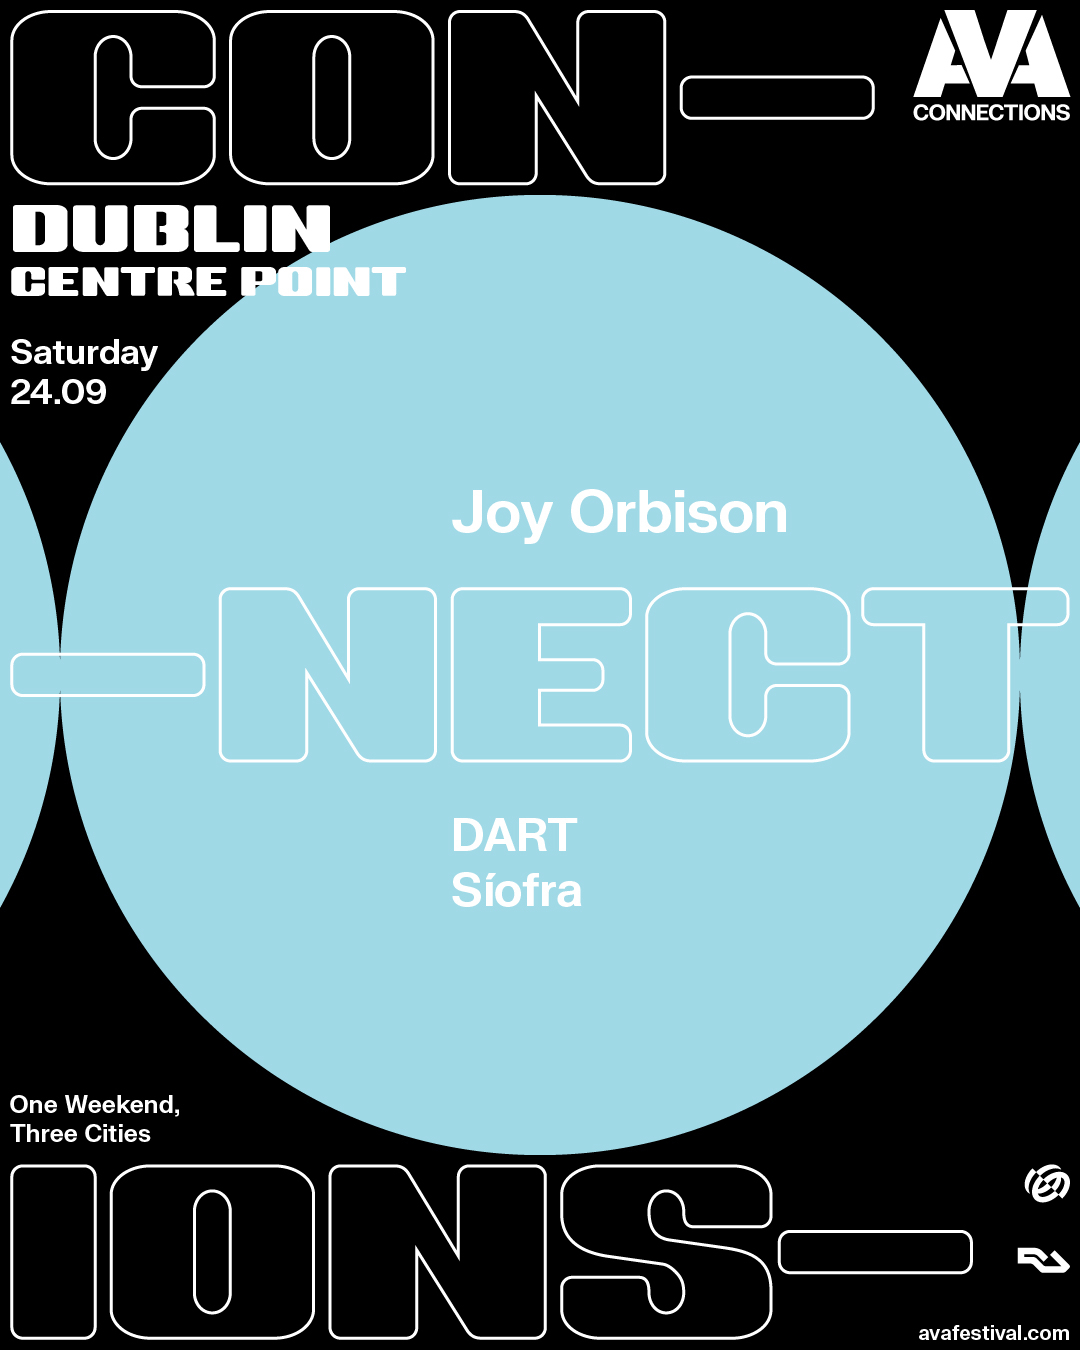 AVA Connections - Dublin: Joy Orbison, DART, Síofra - Flyer front